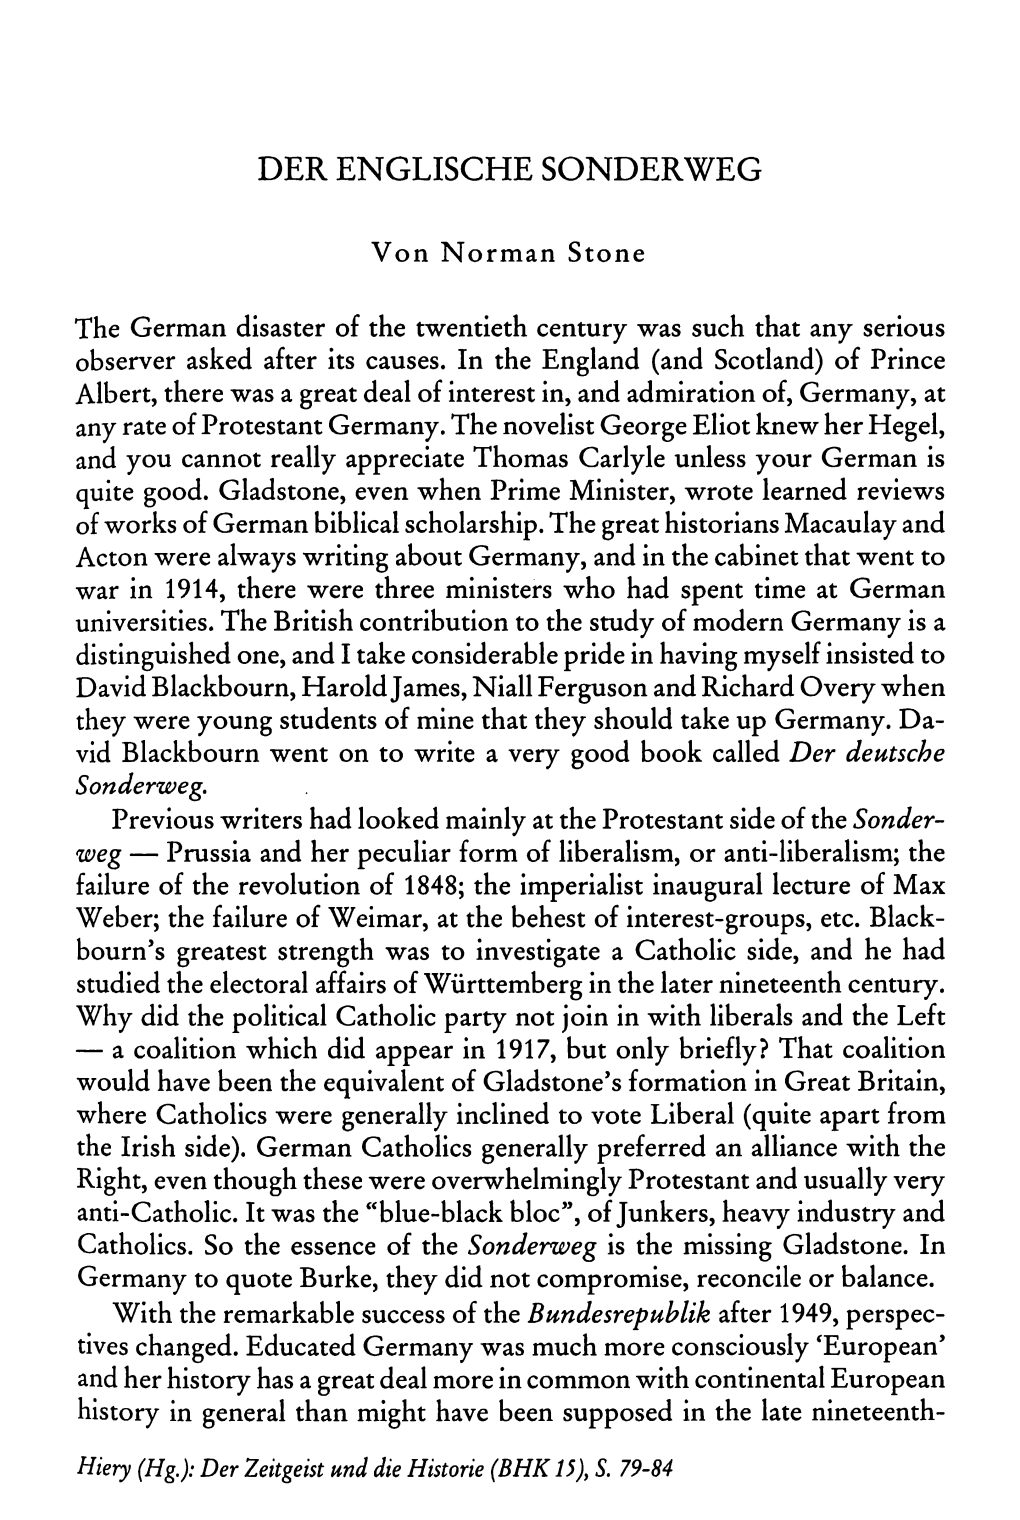 DER ENGLISCHE SONDERWEG Failure of the Revolution of 1848; the Imperialist Inaugural Lecture Of